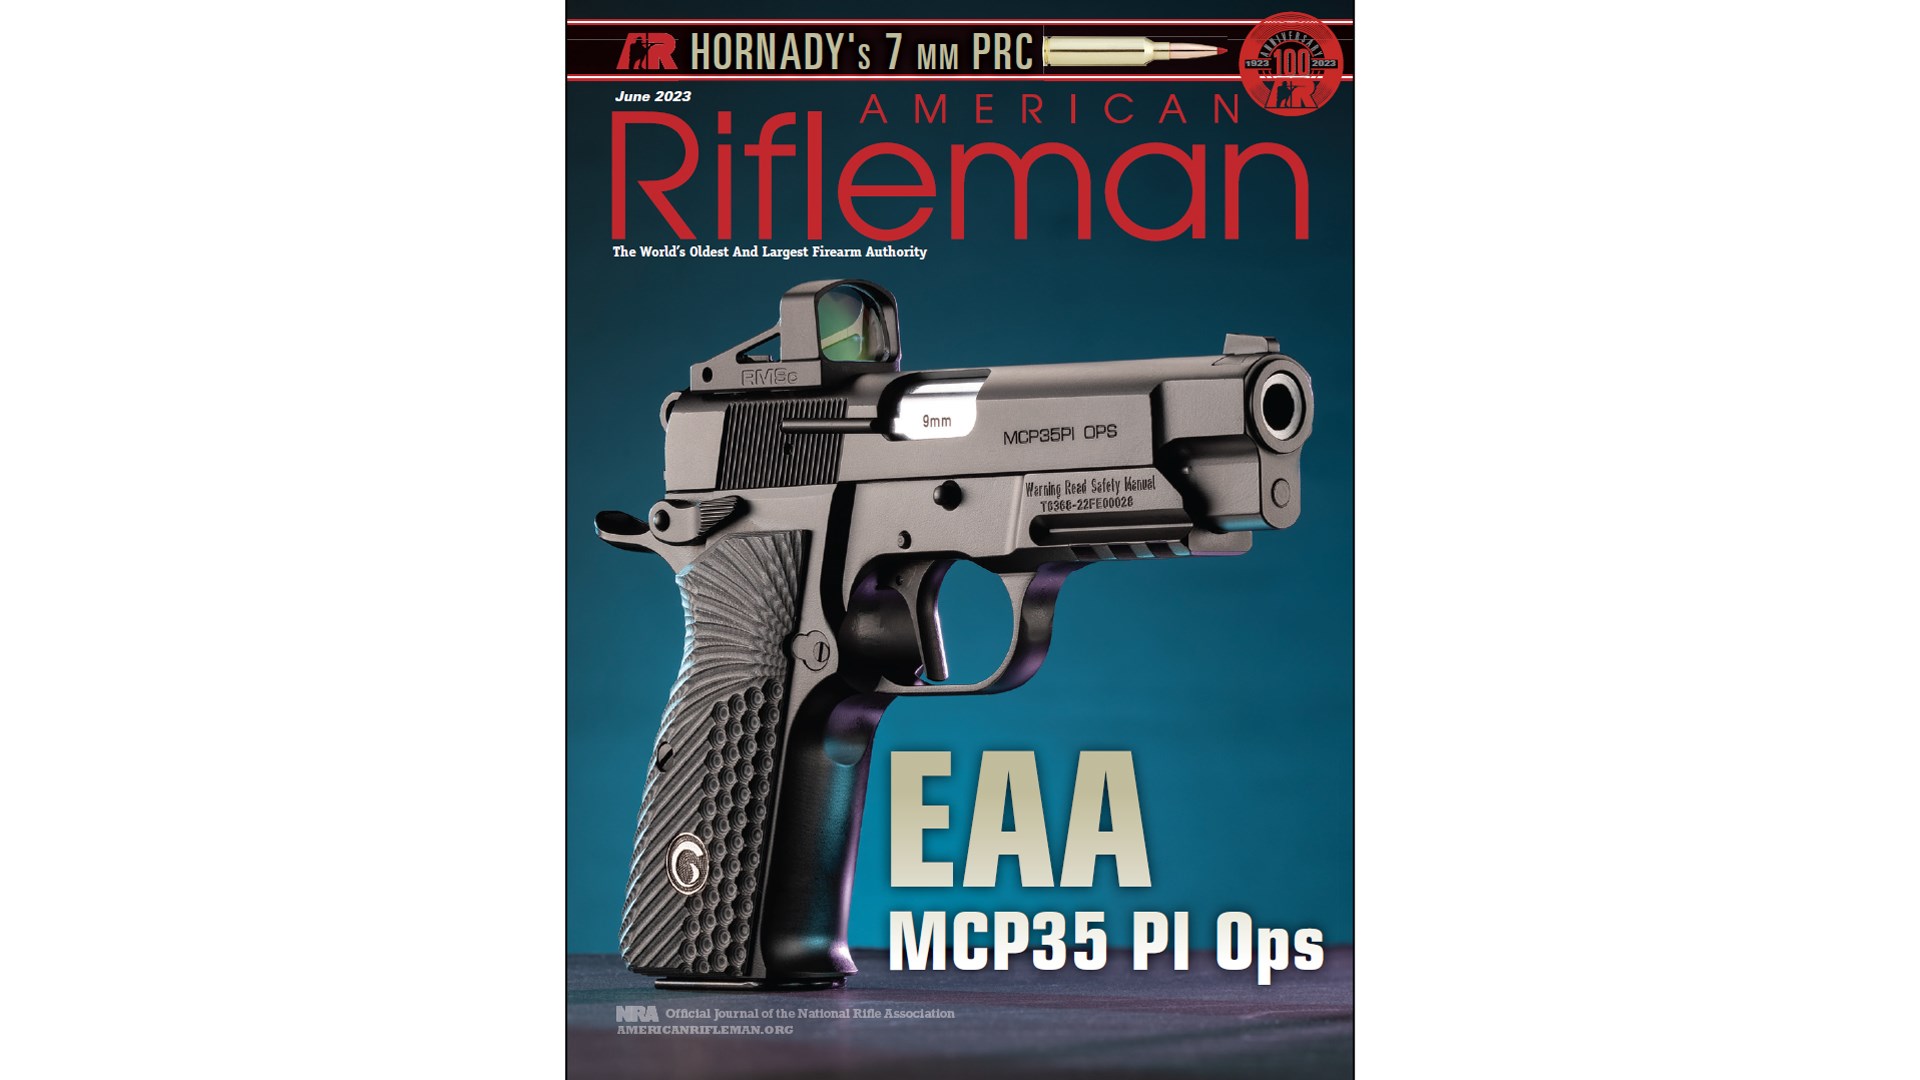 American Rifleman magazine cover June 2023 featuring EAA MCP35 PI Ops optic-ready high power handgun